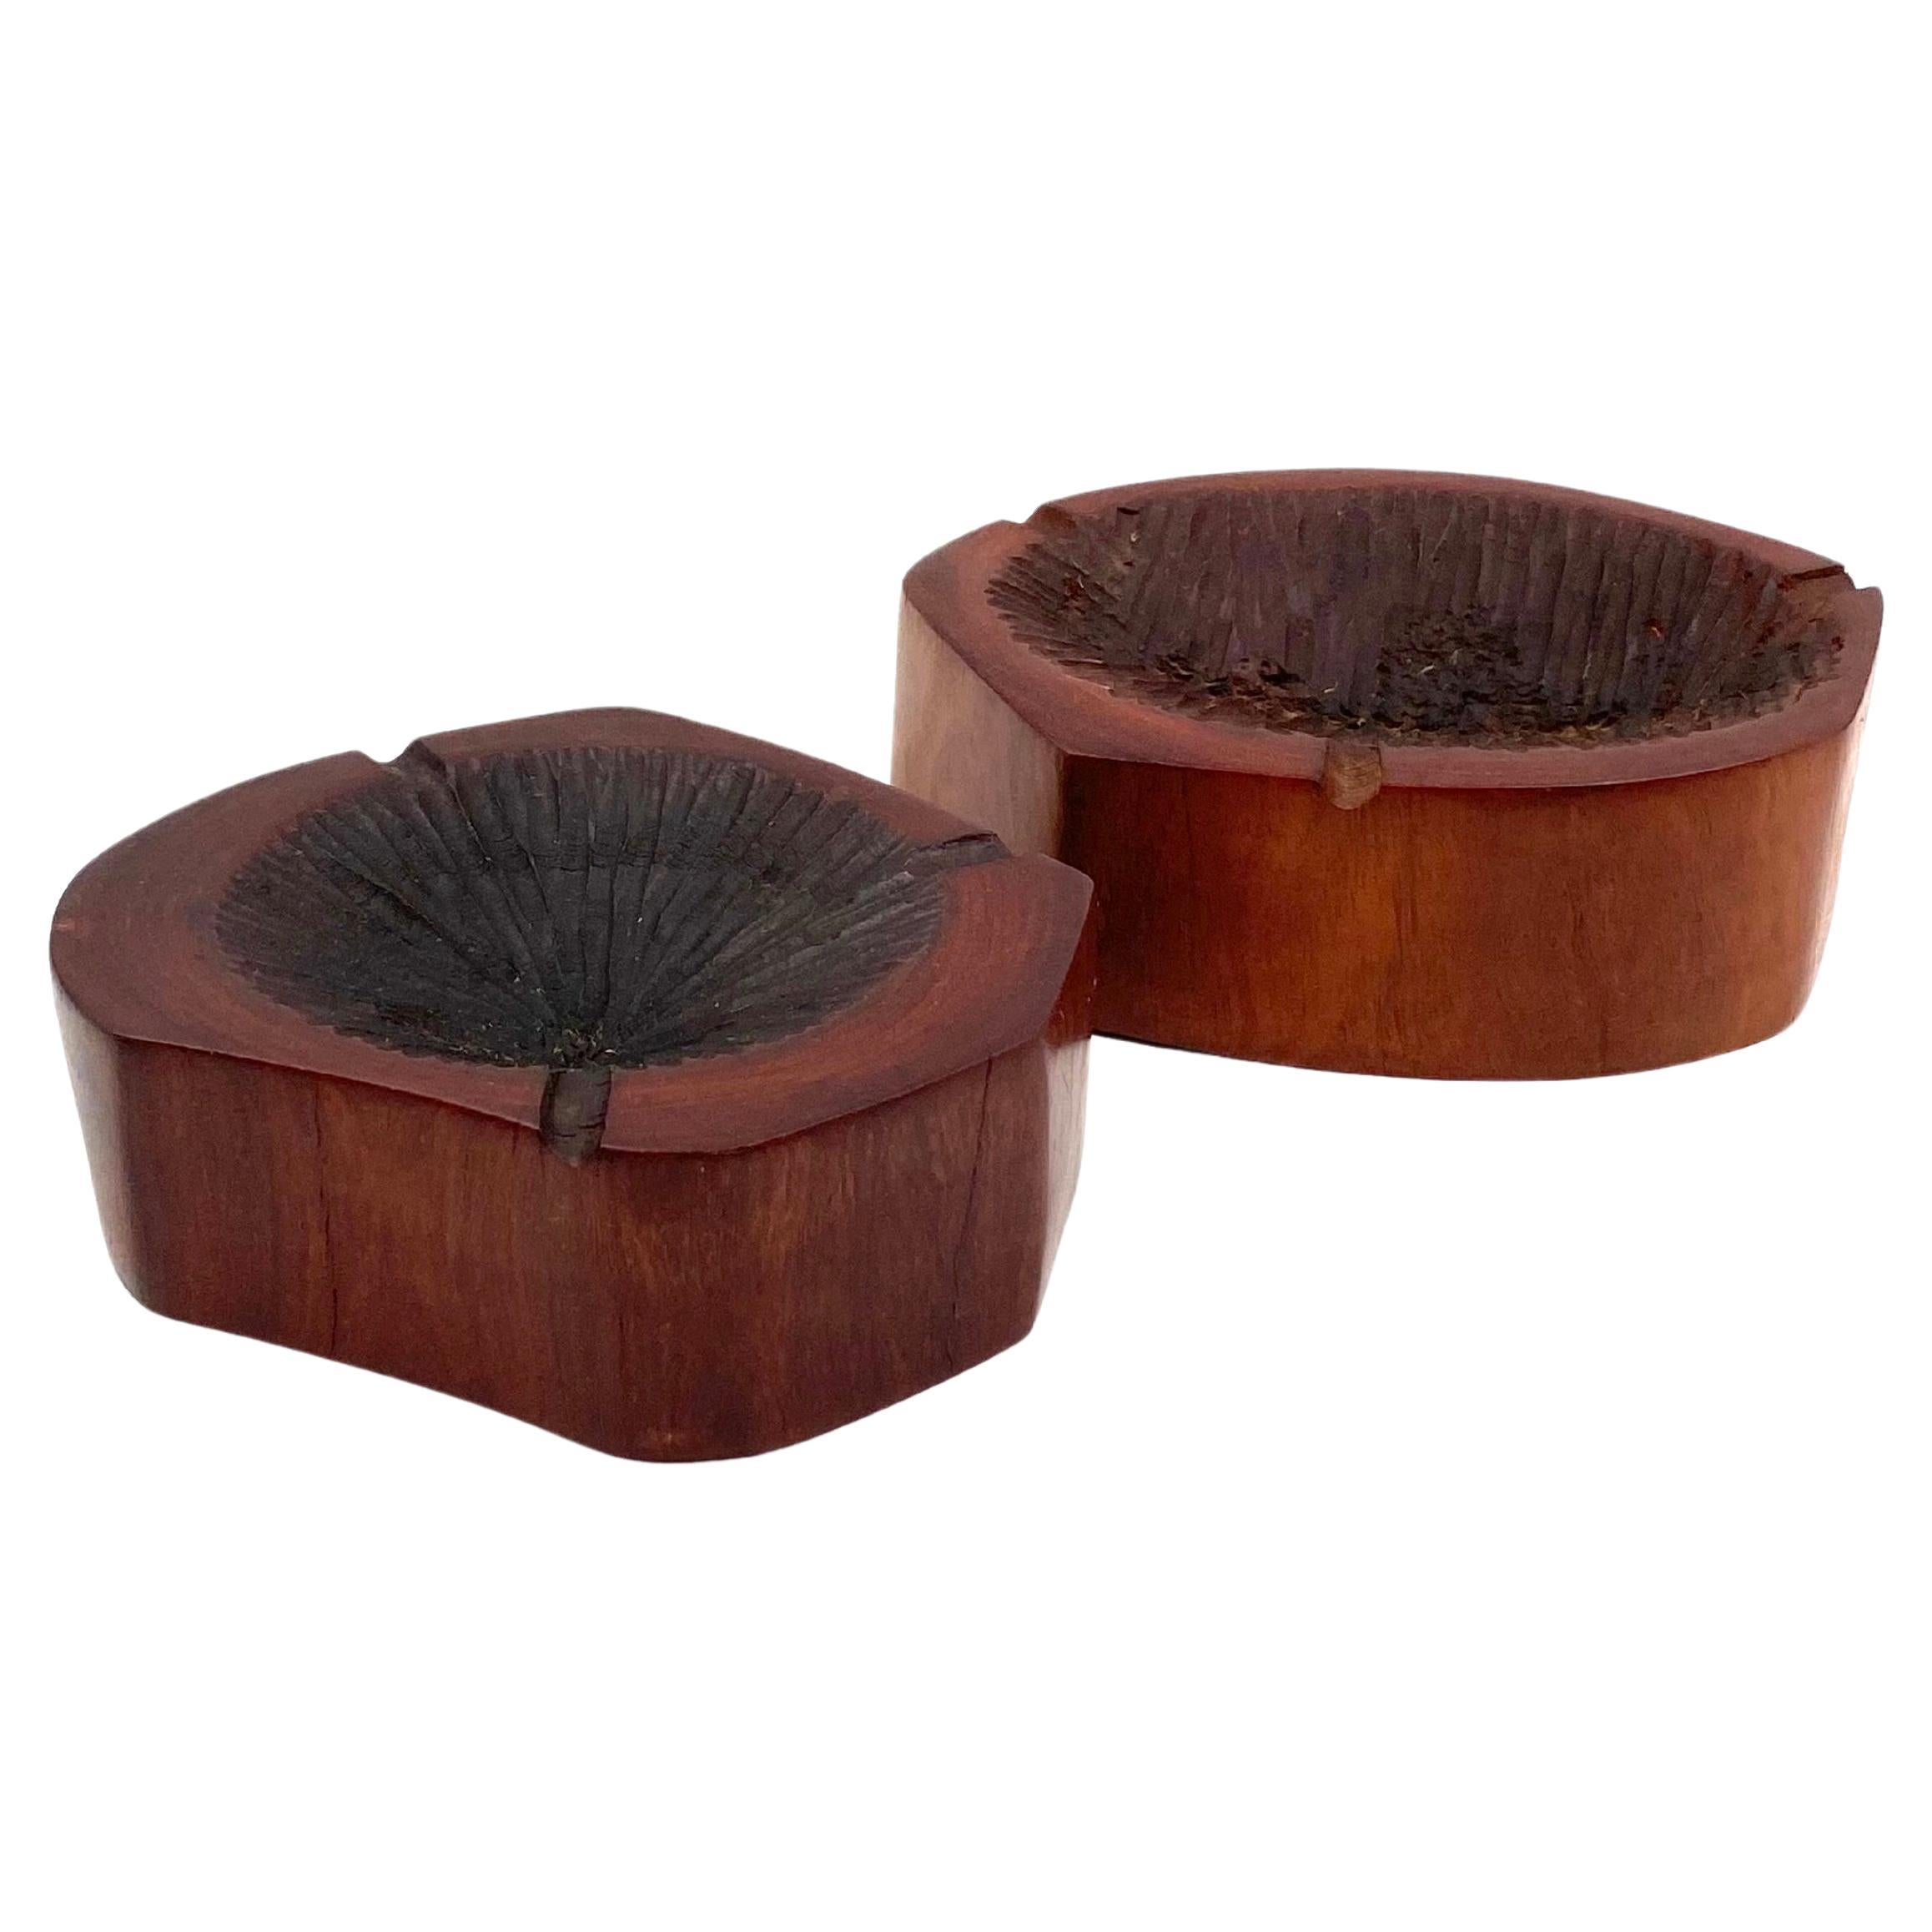 Organic modern set of 2 wood ashtrays, France 1970s